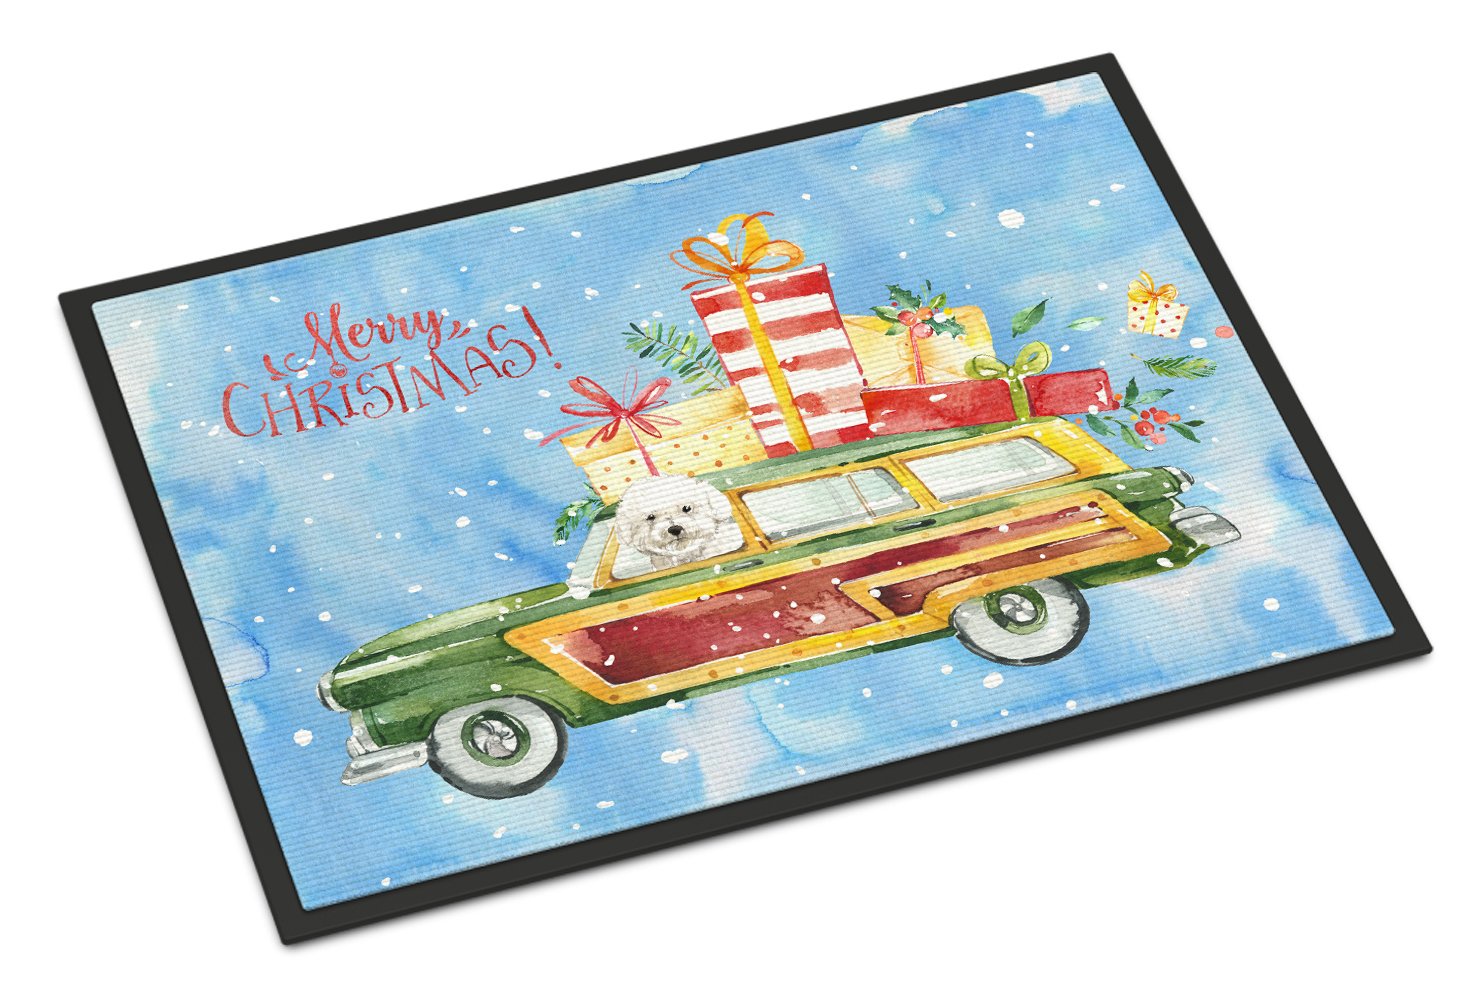 Merry Christmas Bichon Frisé Indoor or Outdoor Mat 24x36 CK2395JMAT by Caroline's Treasures